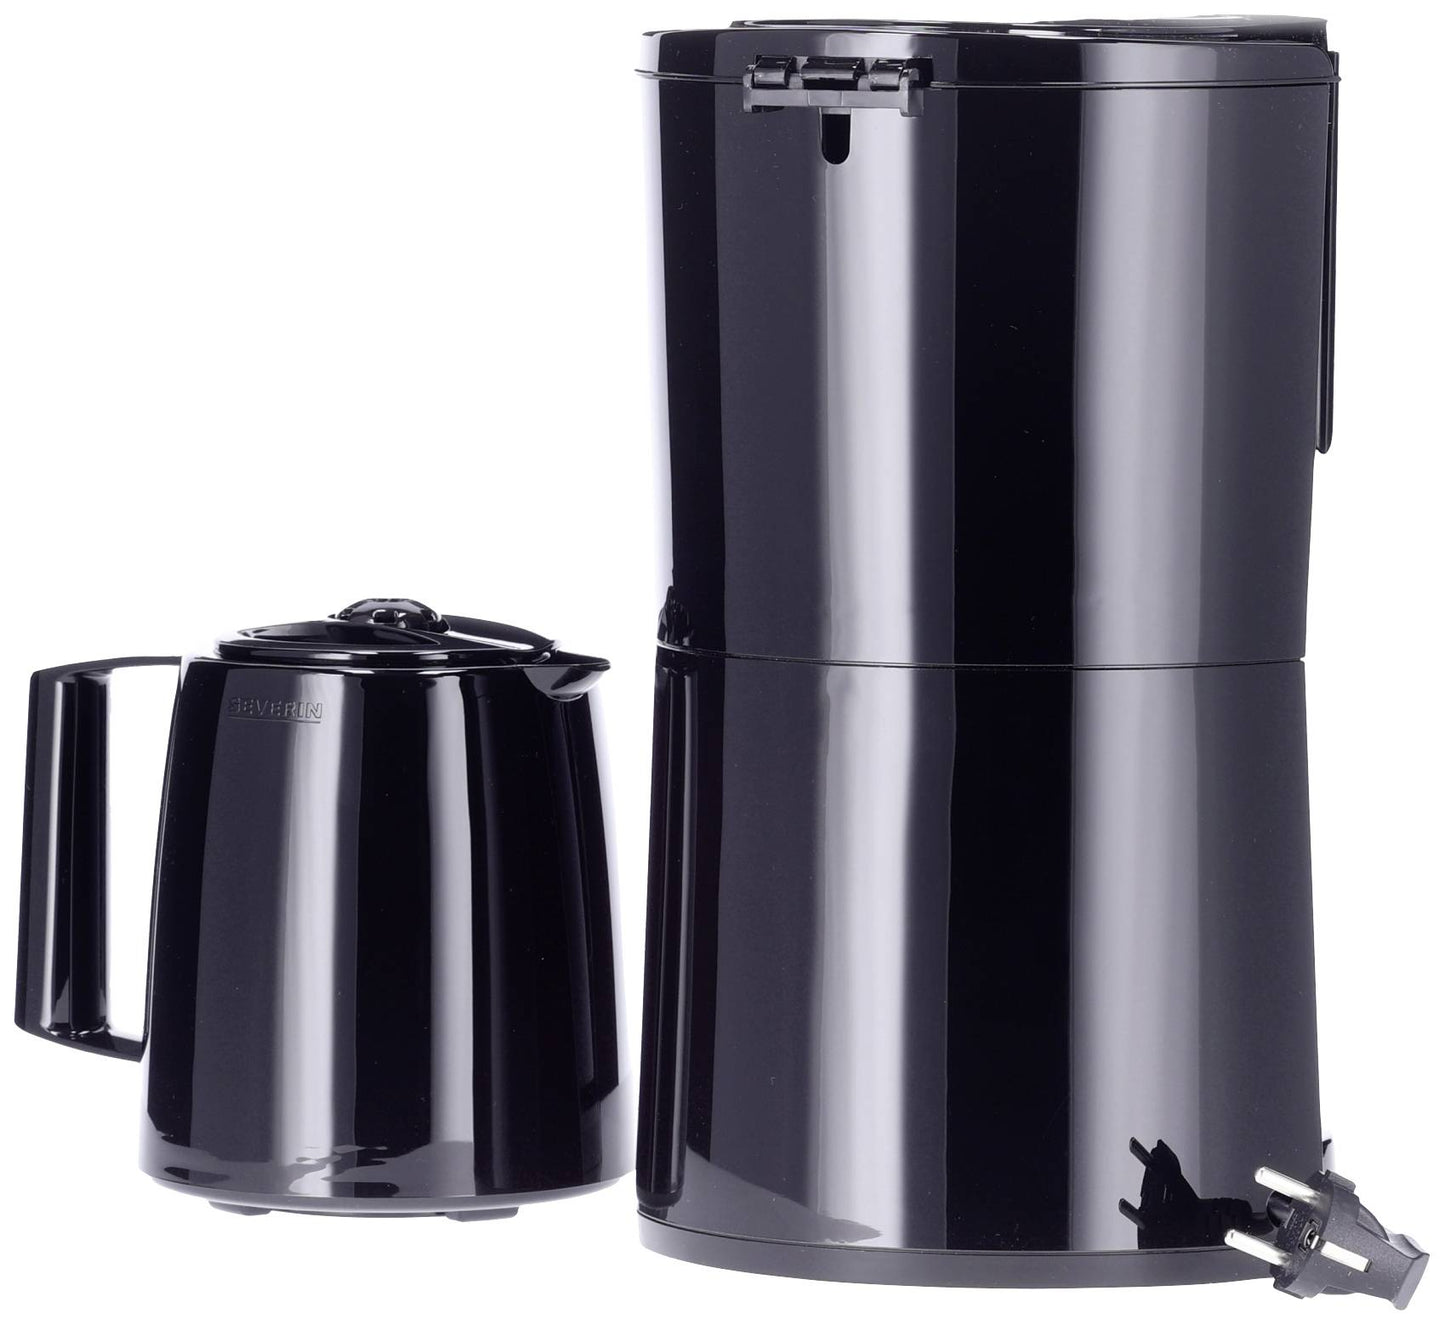 Filter coffee machine. Severin KA 9307